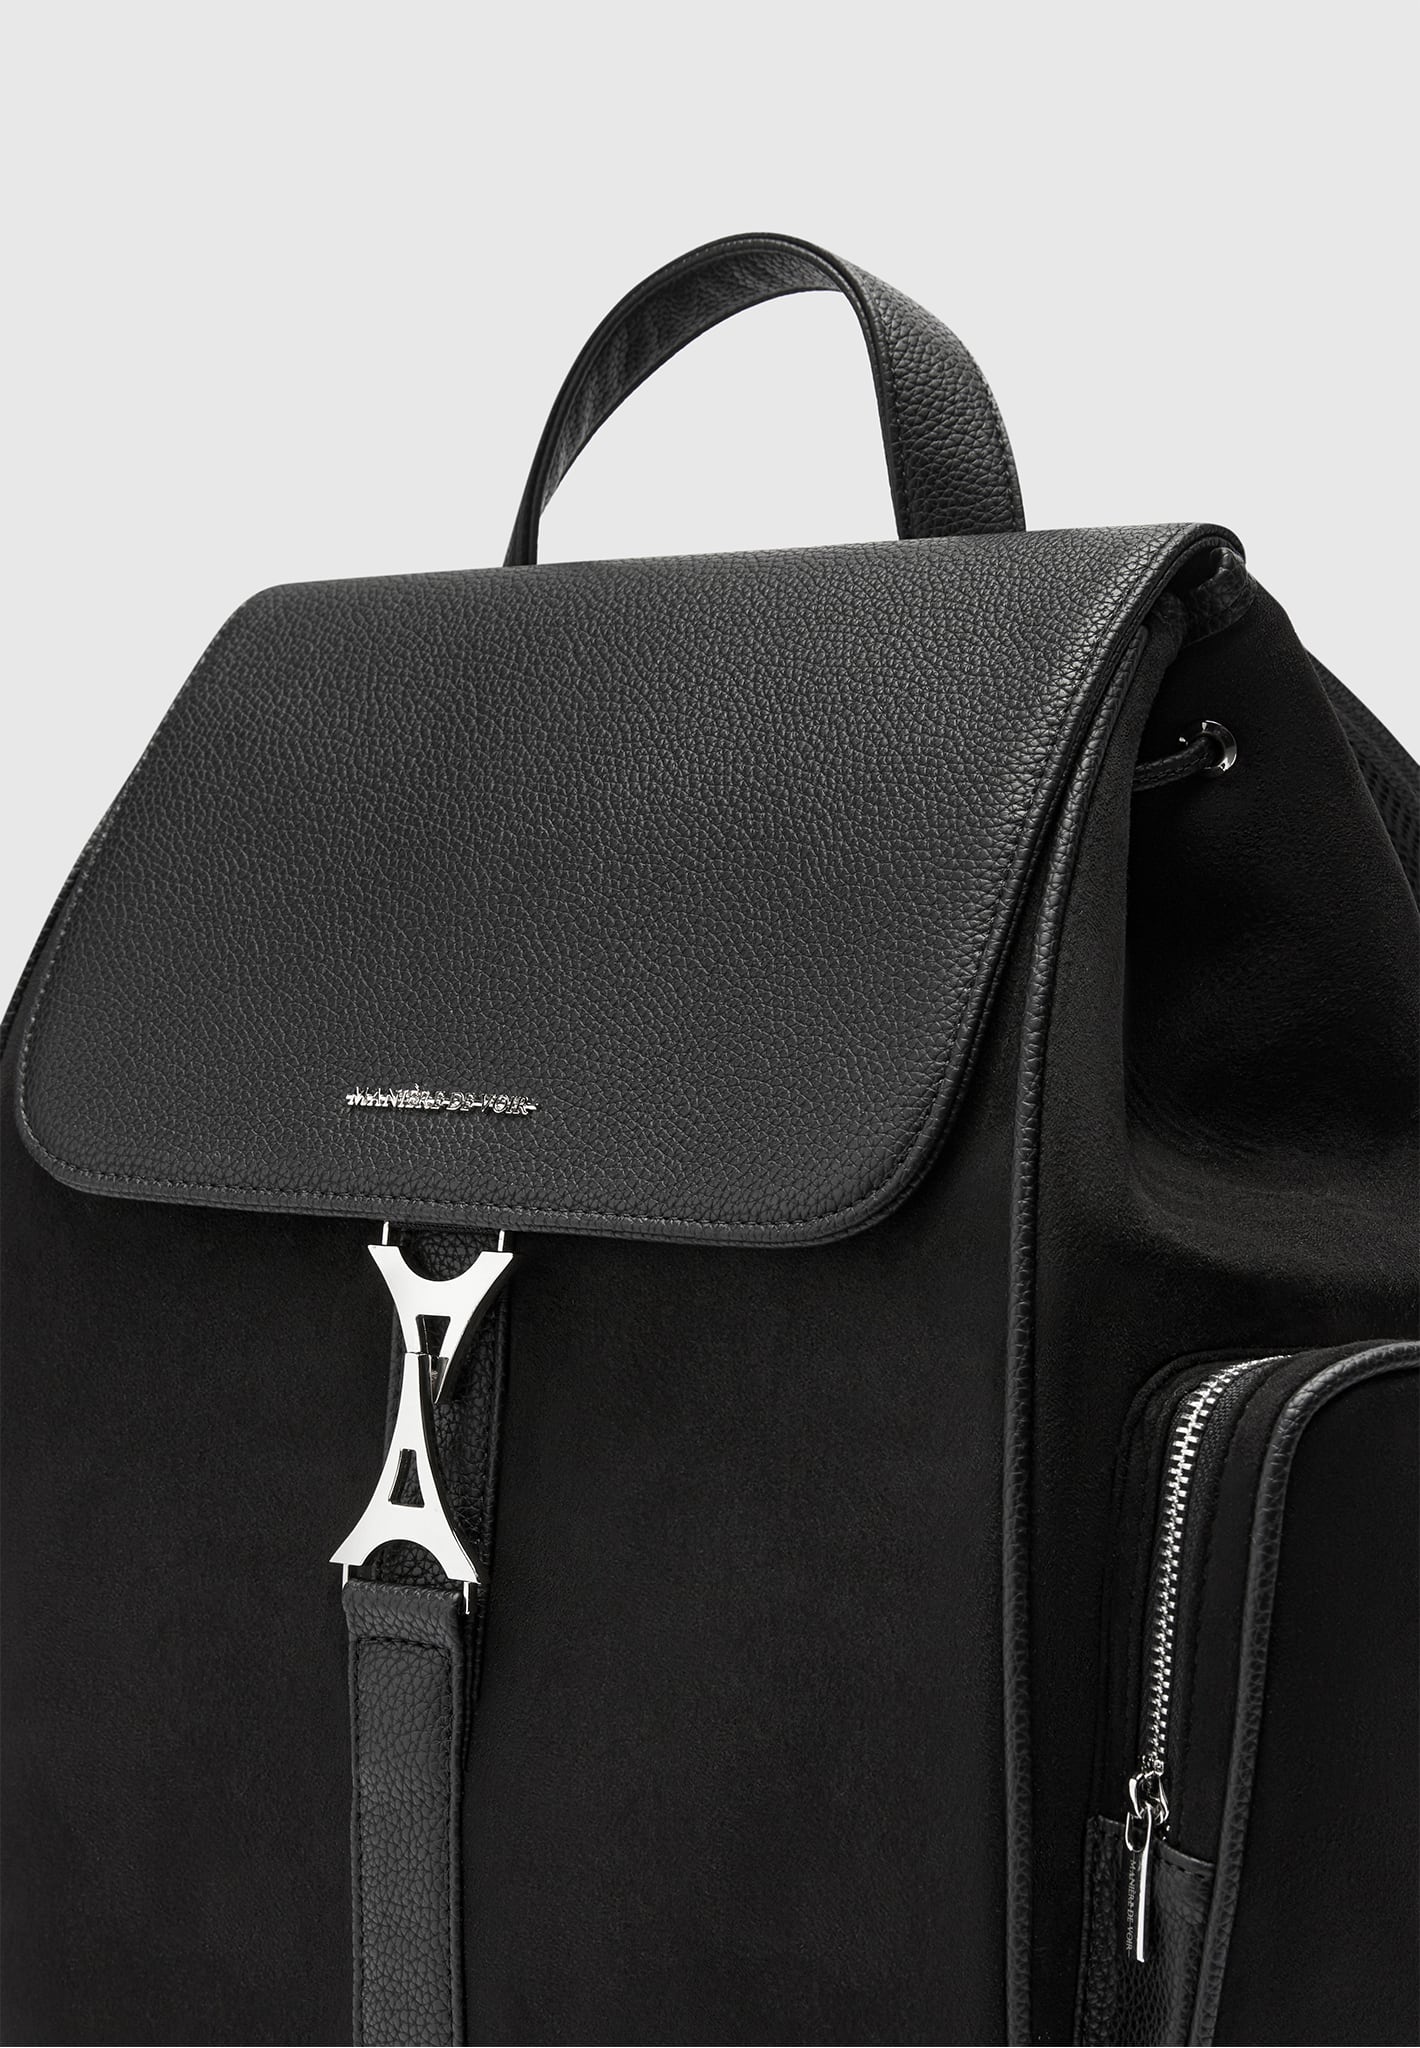 eiffel-clasp-backpack-black